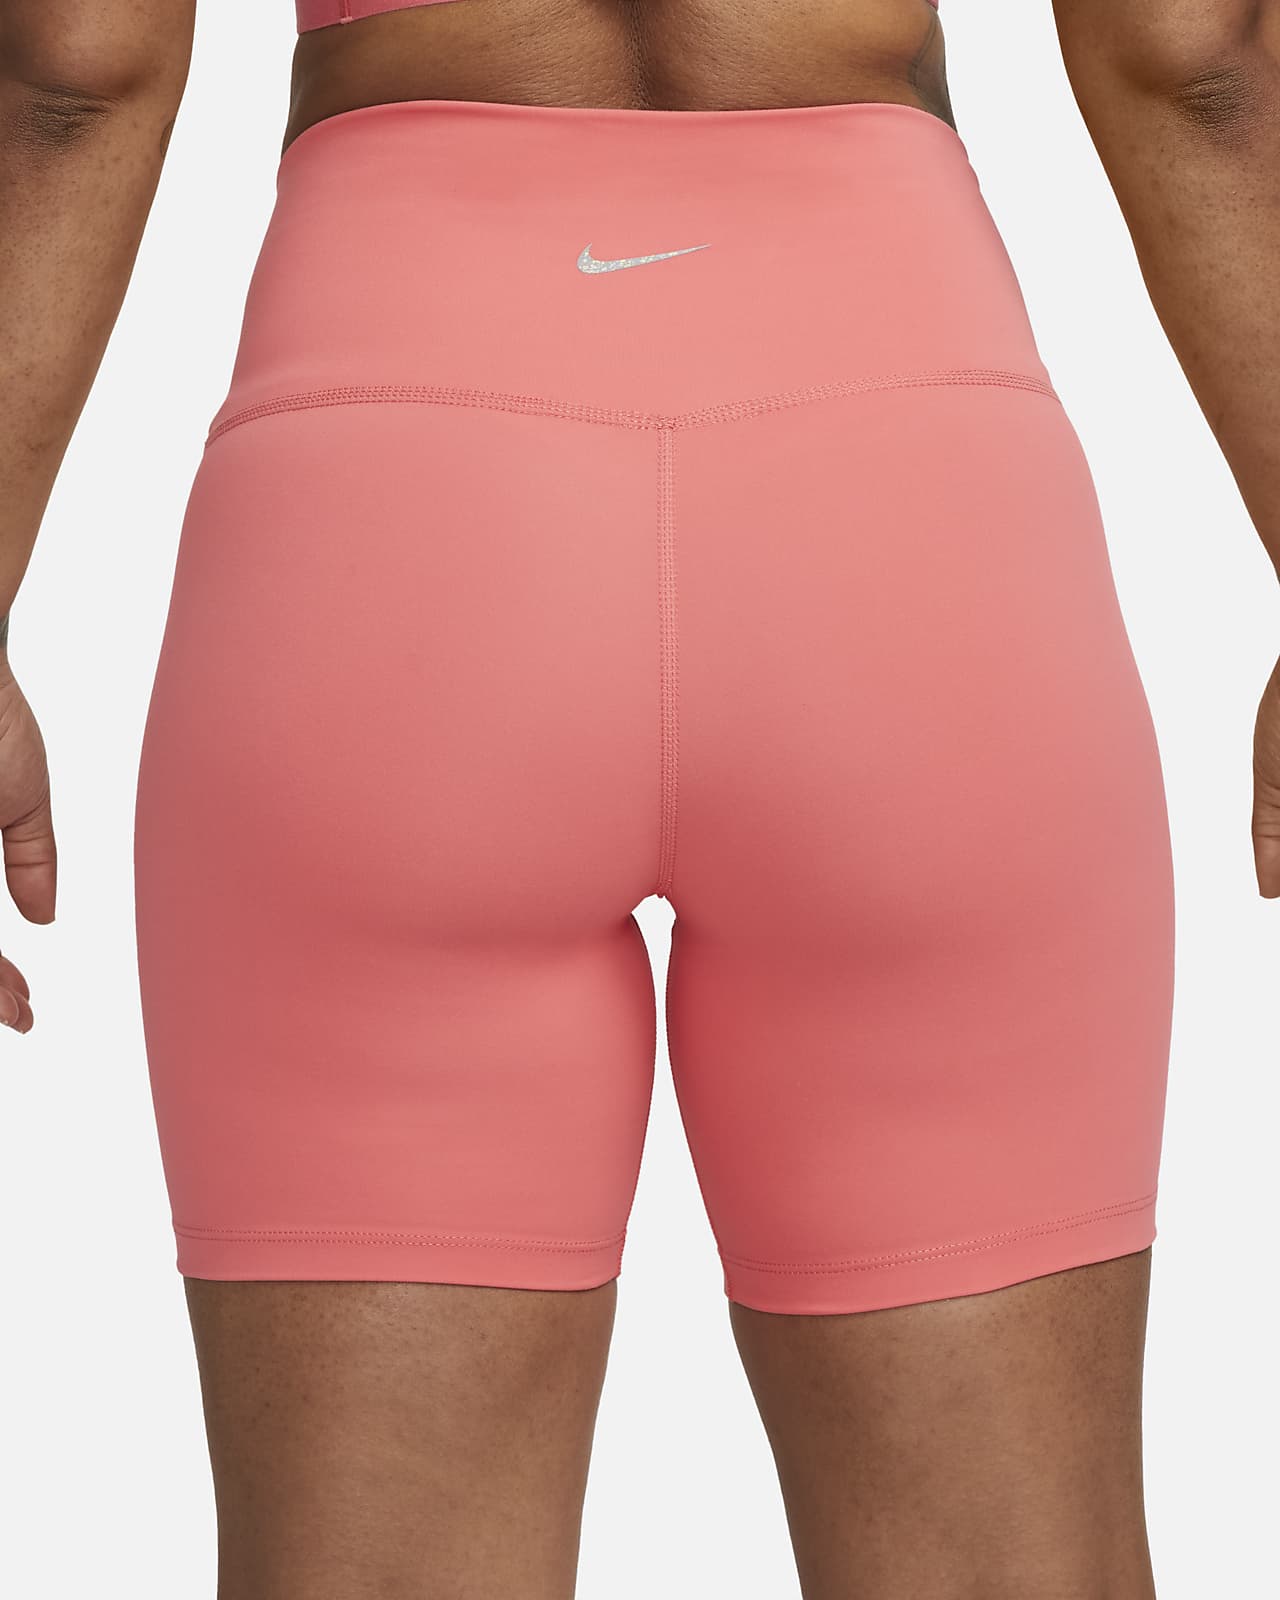 Nike Yoga high rise 7 inch shorts in pink